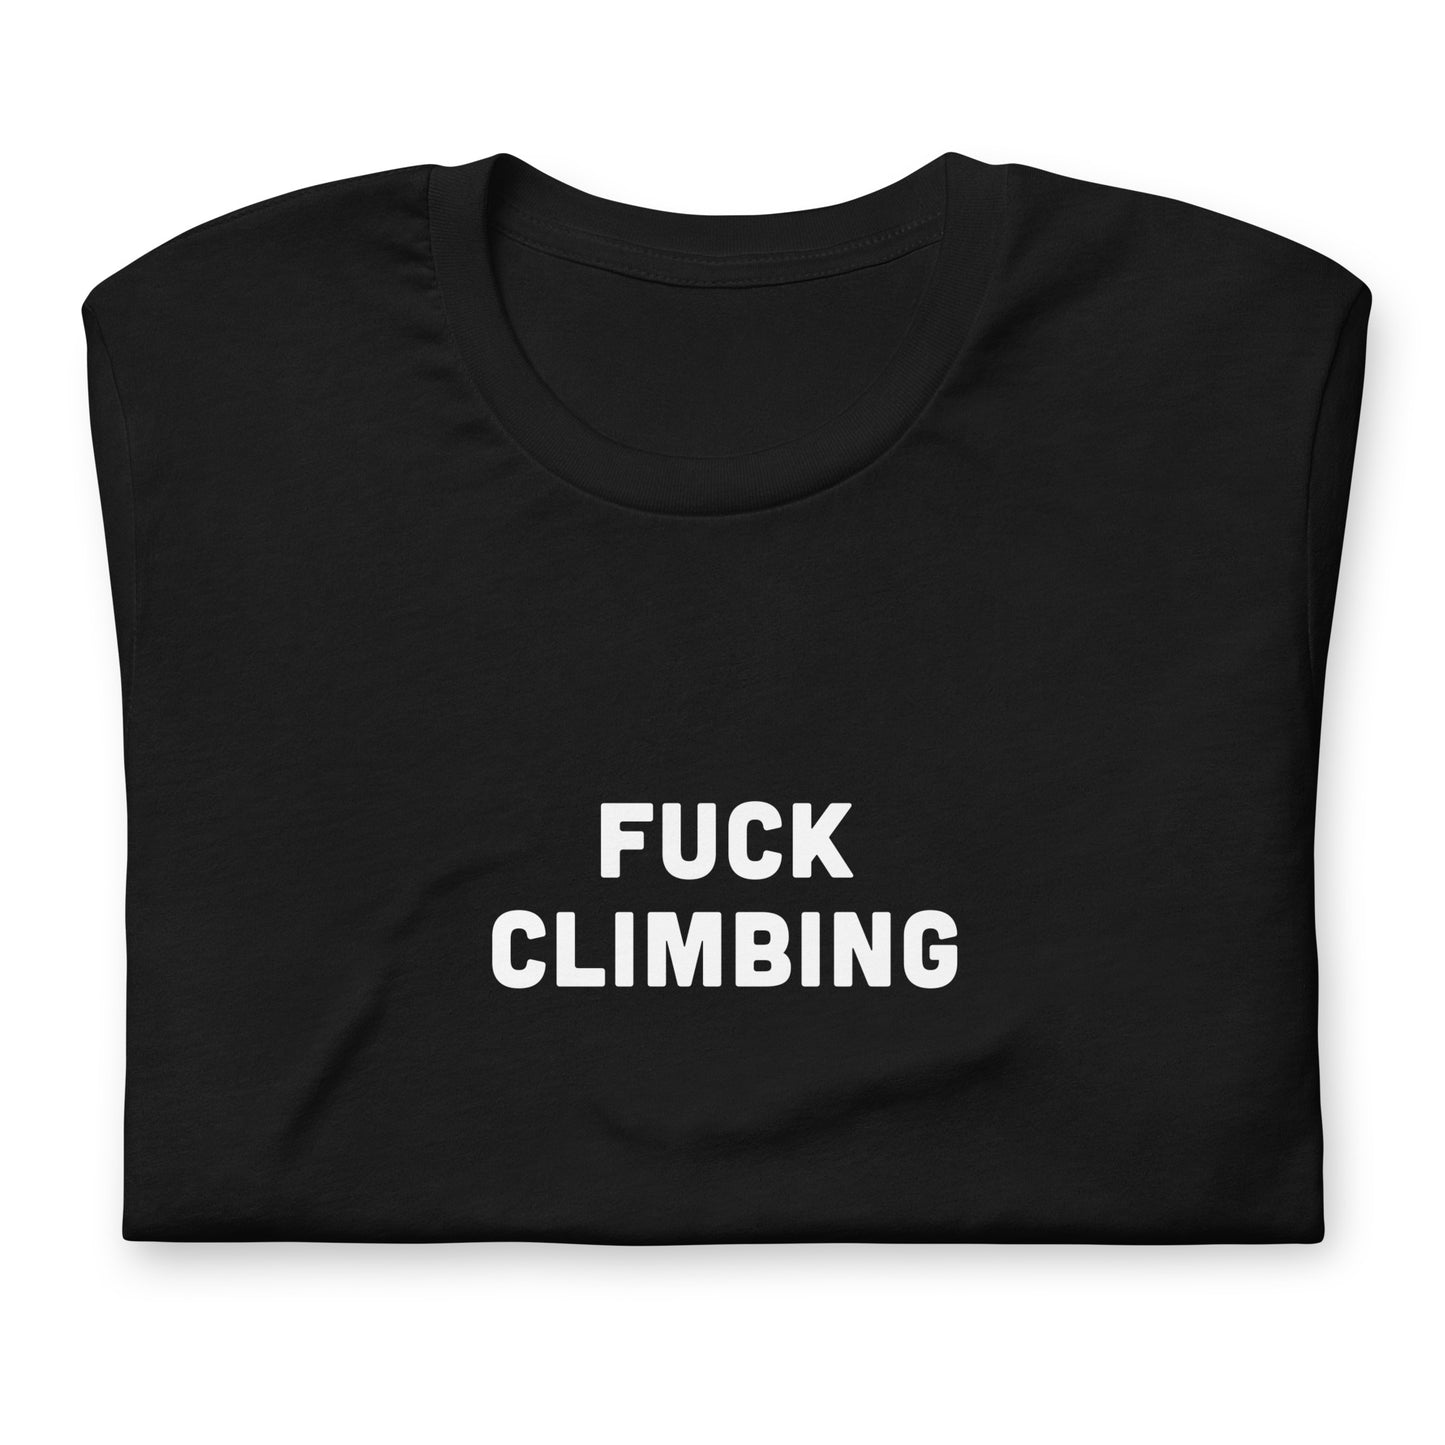 Fuck Climbing T-Shirt Size M Color Black